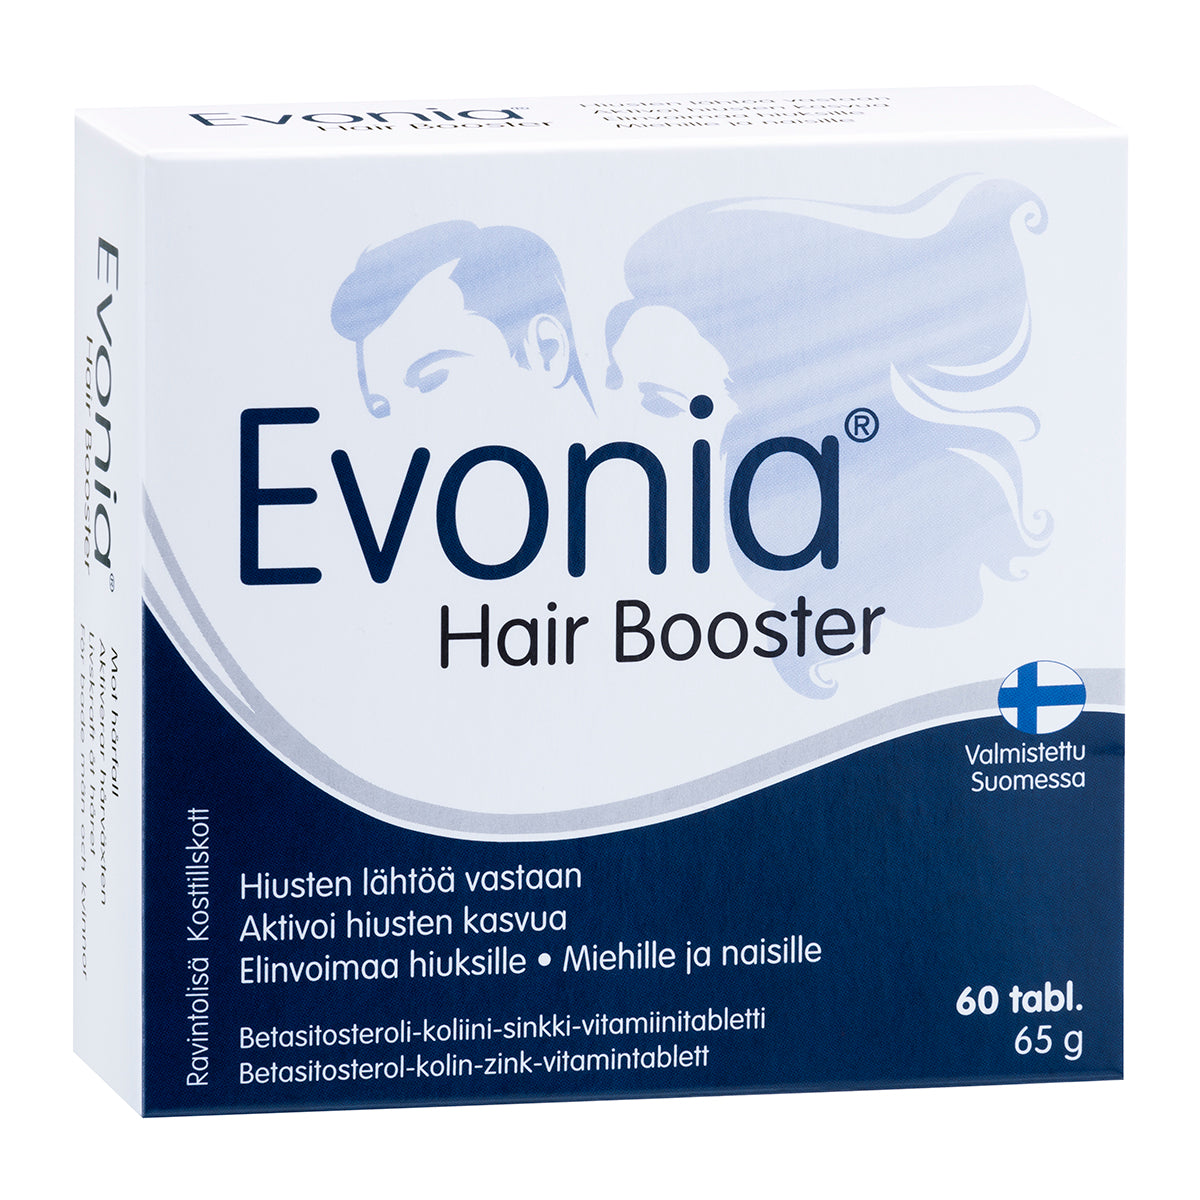 Evonia® Hair Booster